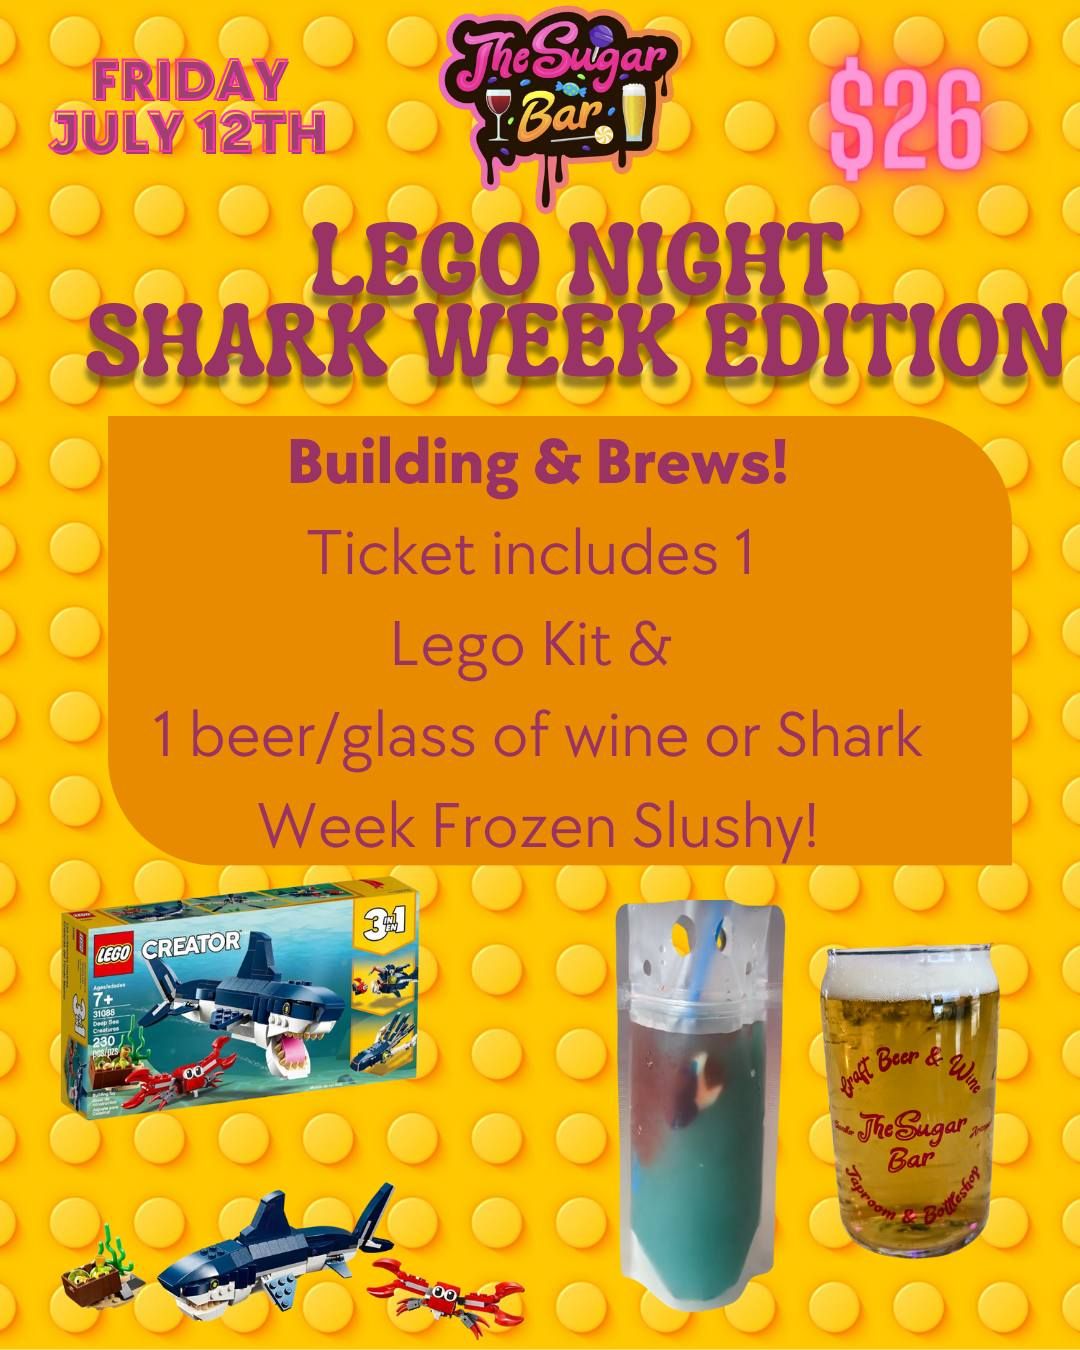 Lego Night - Shark Week Edition at The Sugar Bar!